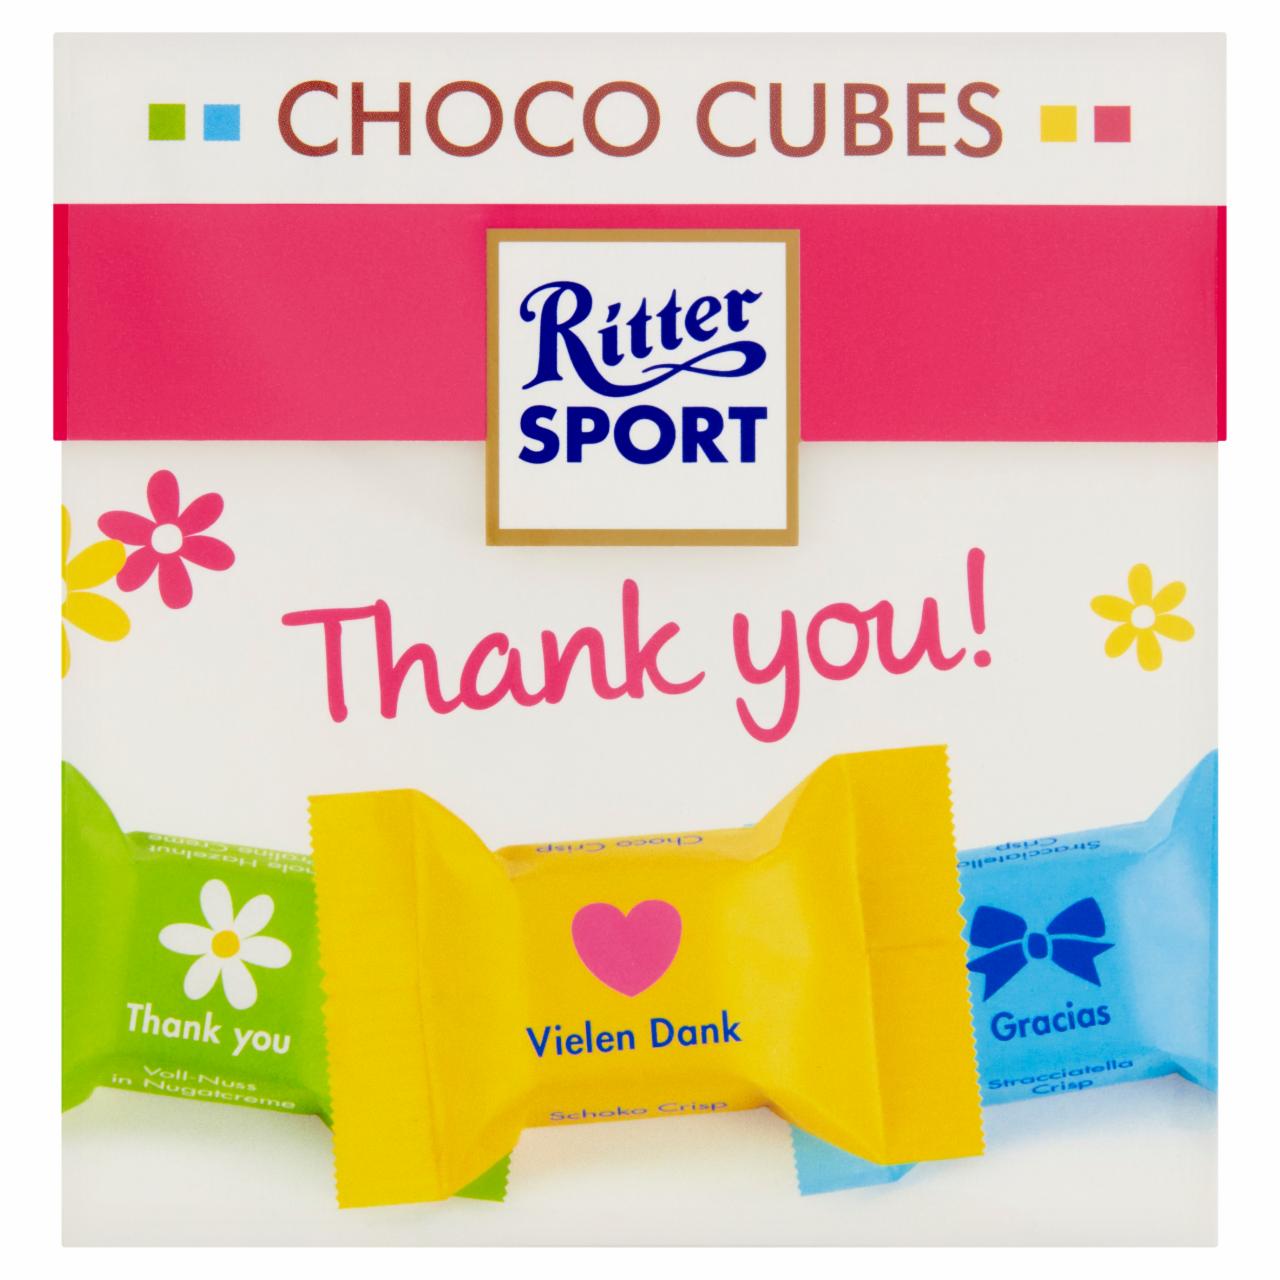 Fotografie - Choco Cubes Thank You! Ritter Sport